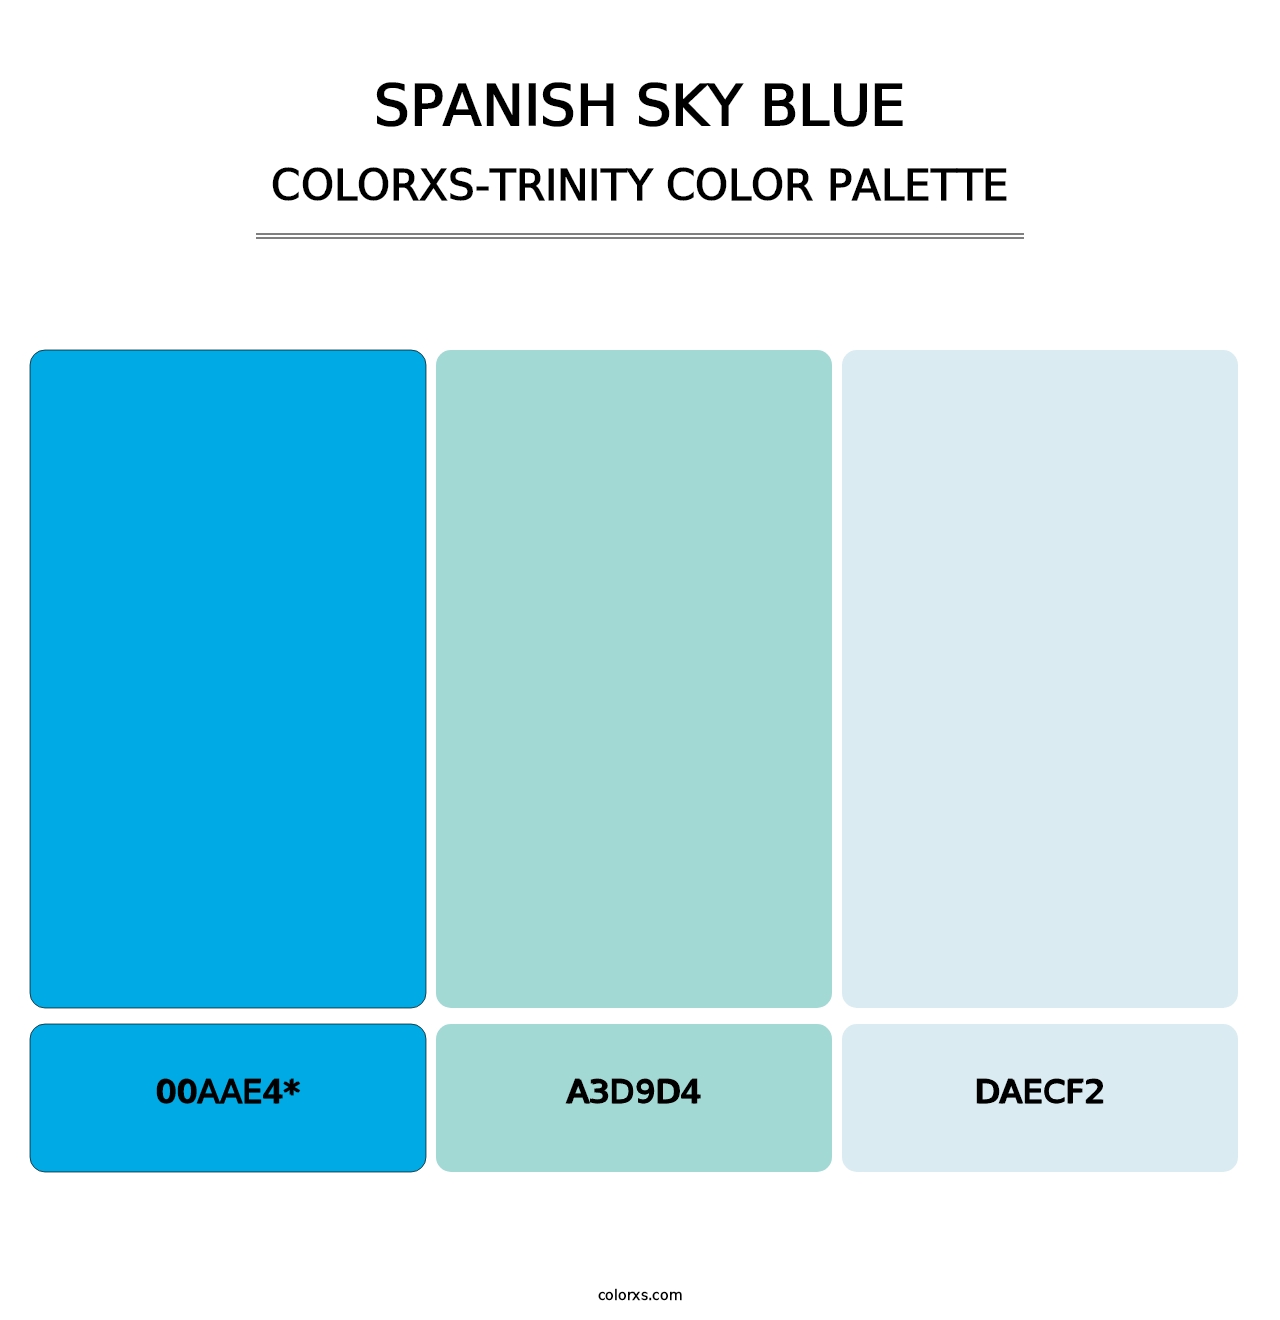 Spanish Sky Blue - Colorxs Trinity Palette